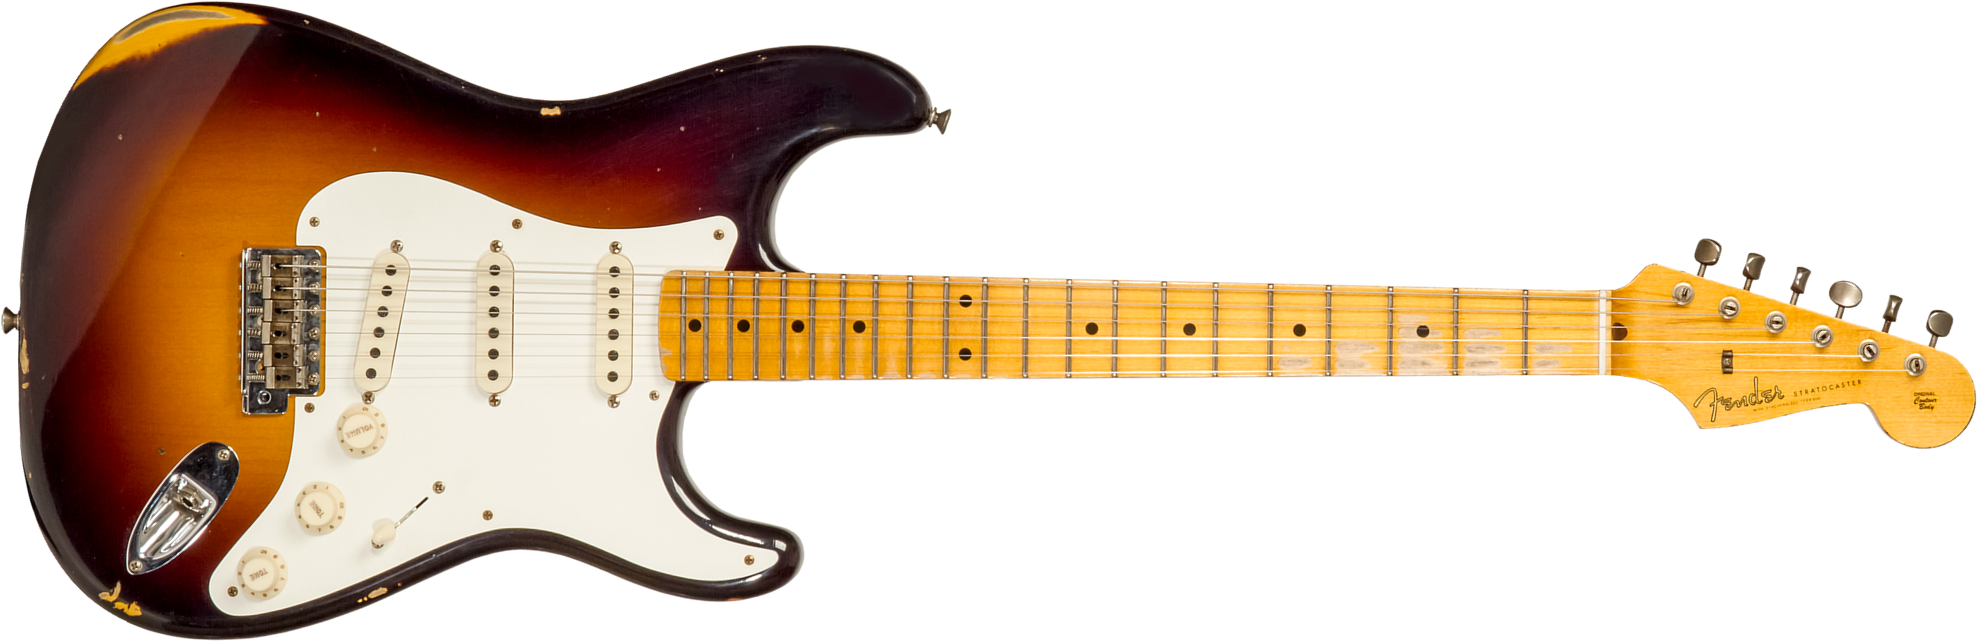 Fender Custom Shop Strat 1957 3s Trem Mn #cz571791 - Relic Wide Fade 2-color Sunburst - Str shape electric guitar - Main picture